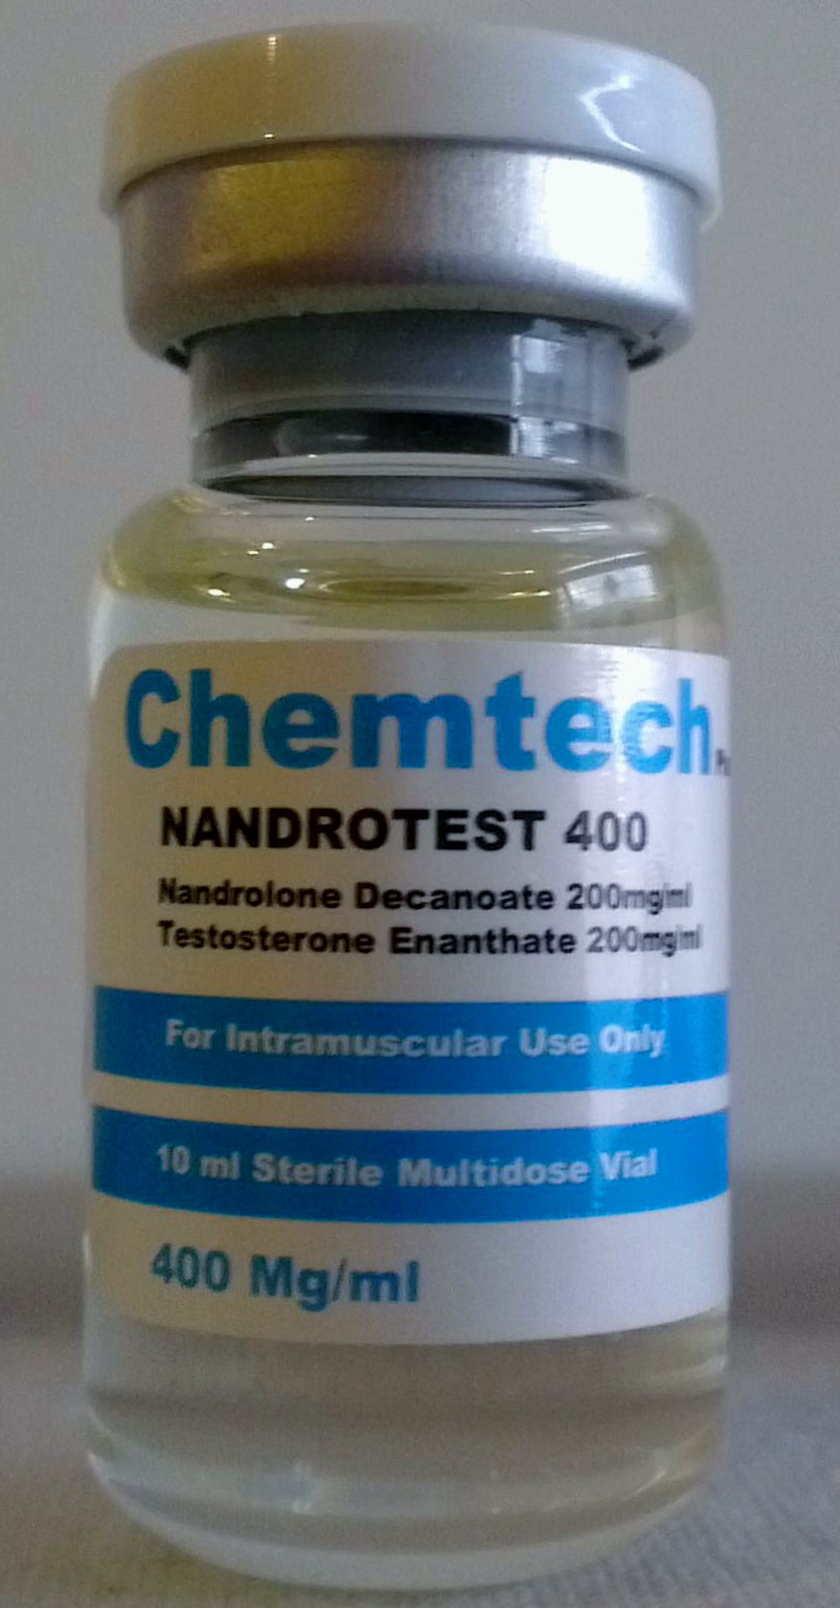 Nandrotest 400